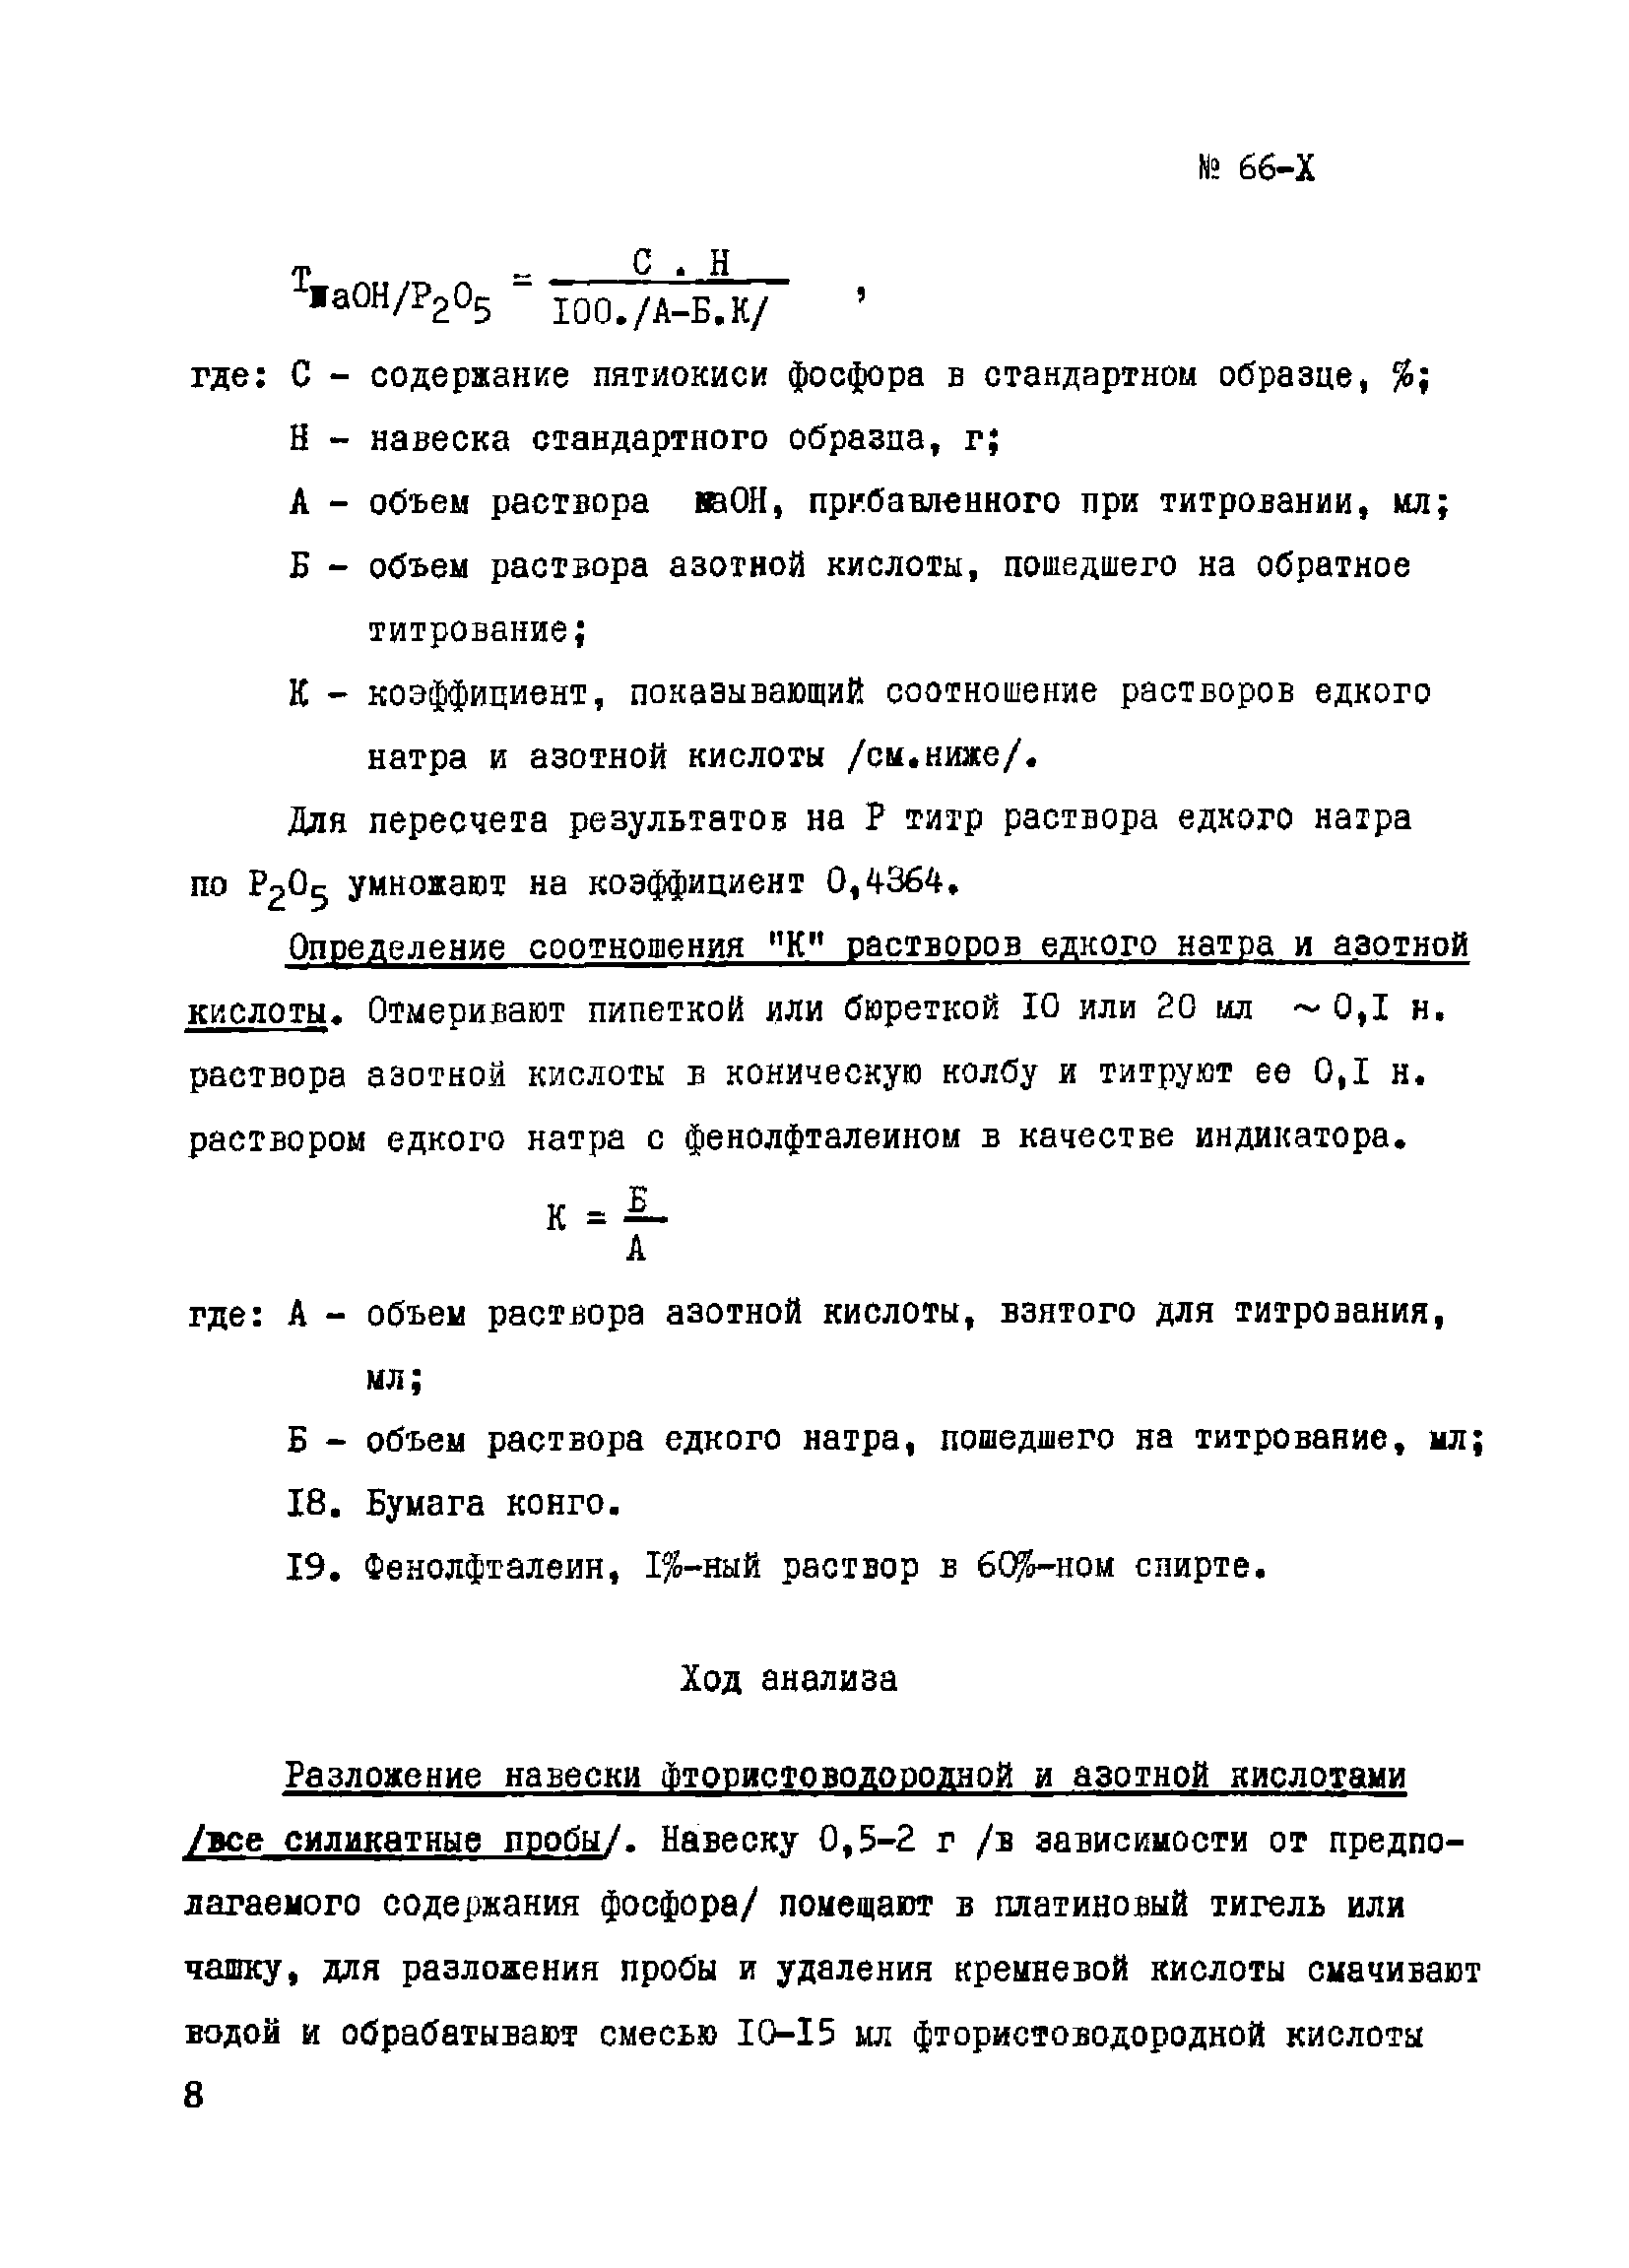 Инструкция НСАМ 66-Х